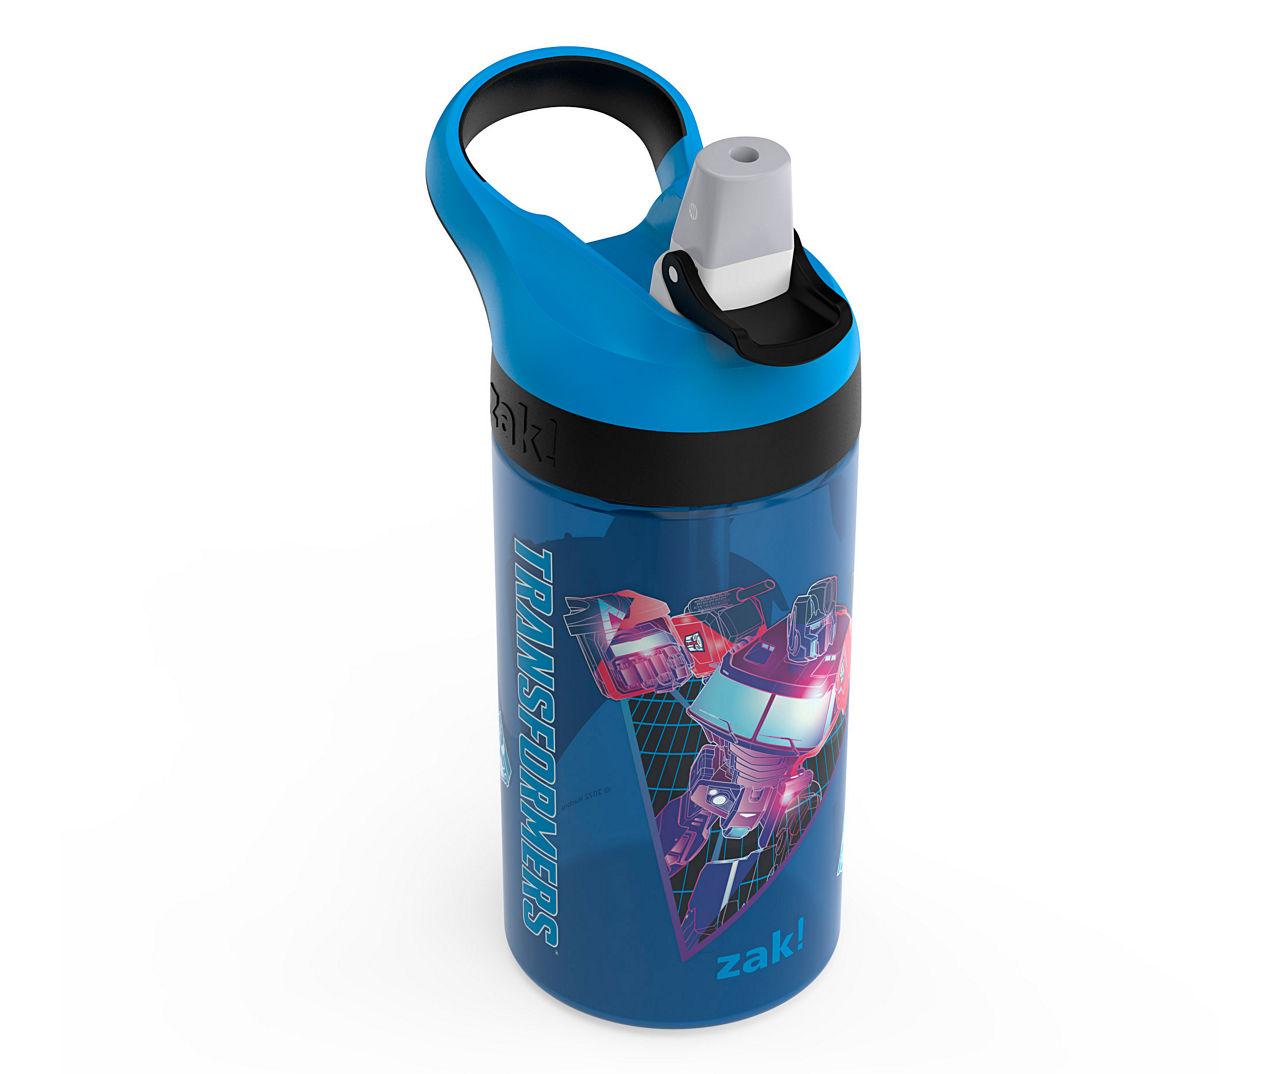 Transformers Atlantic Blue Spout Water Bottle, 16 oz.